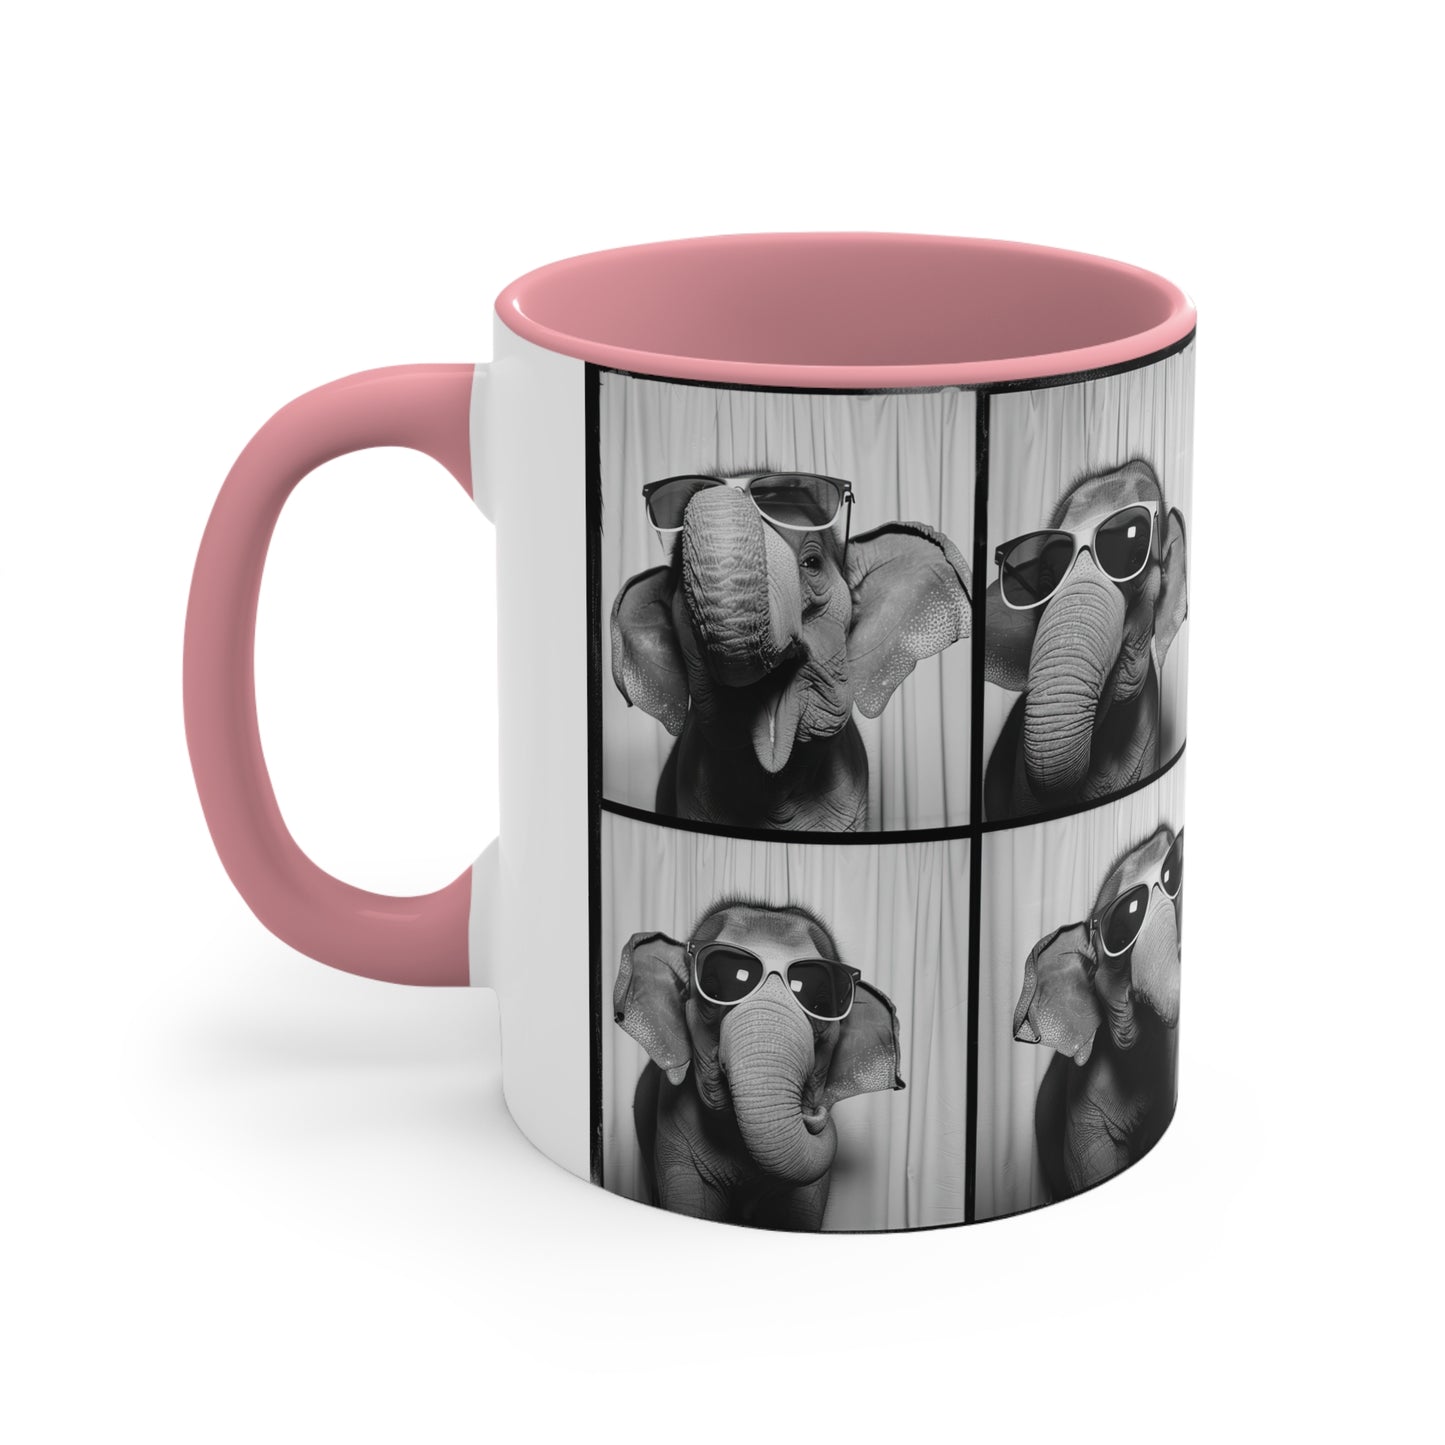 Elephant Photo Booth Accent Coffee Mug, 11oz